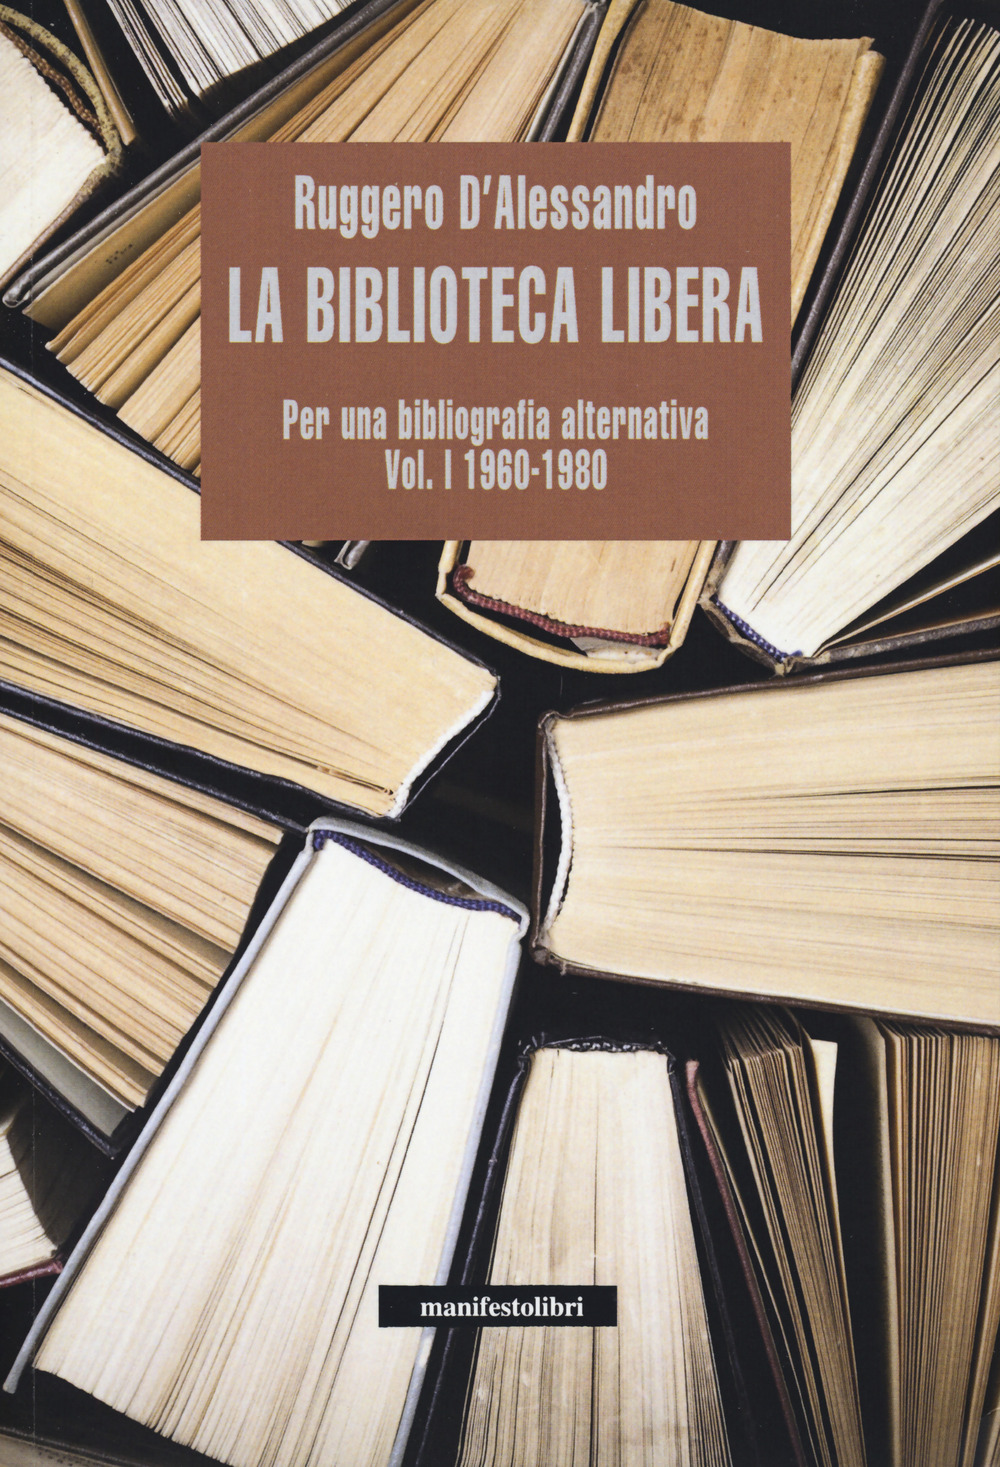 La biblioteca libera. Per una bibliografia alternativa. Vol. 1: 1960-1980